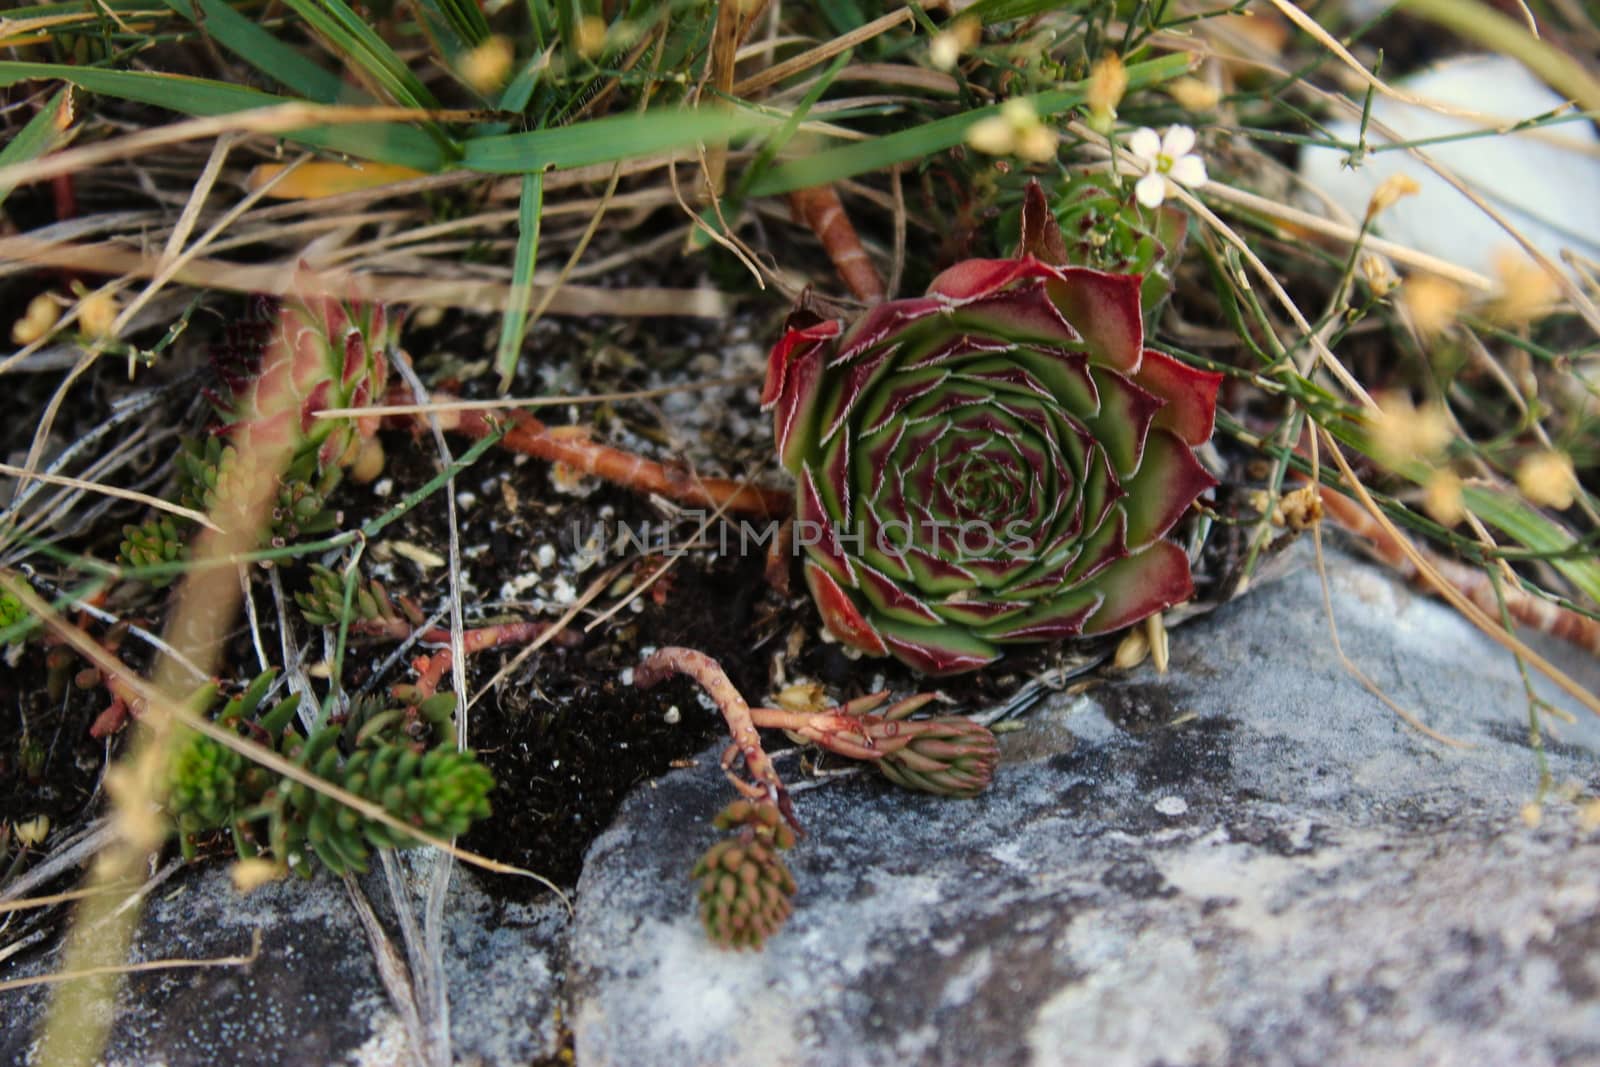 Sempervivum on stone. Mountain plants. On the mountain Bjelasnica, Bosnia and Herzegovina.